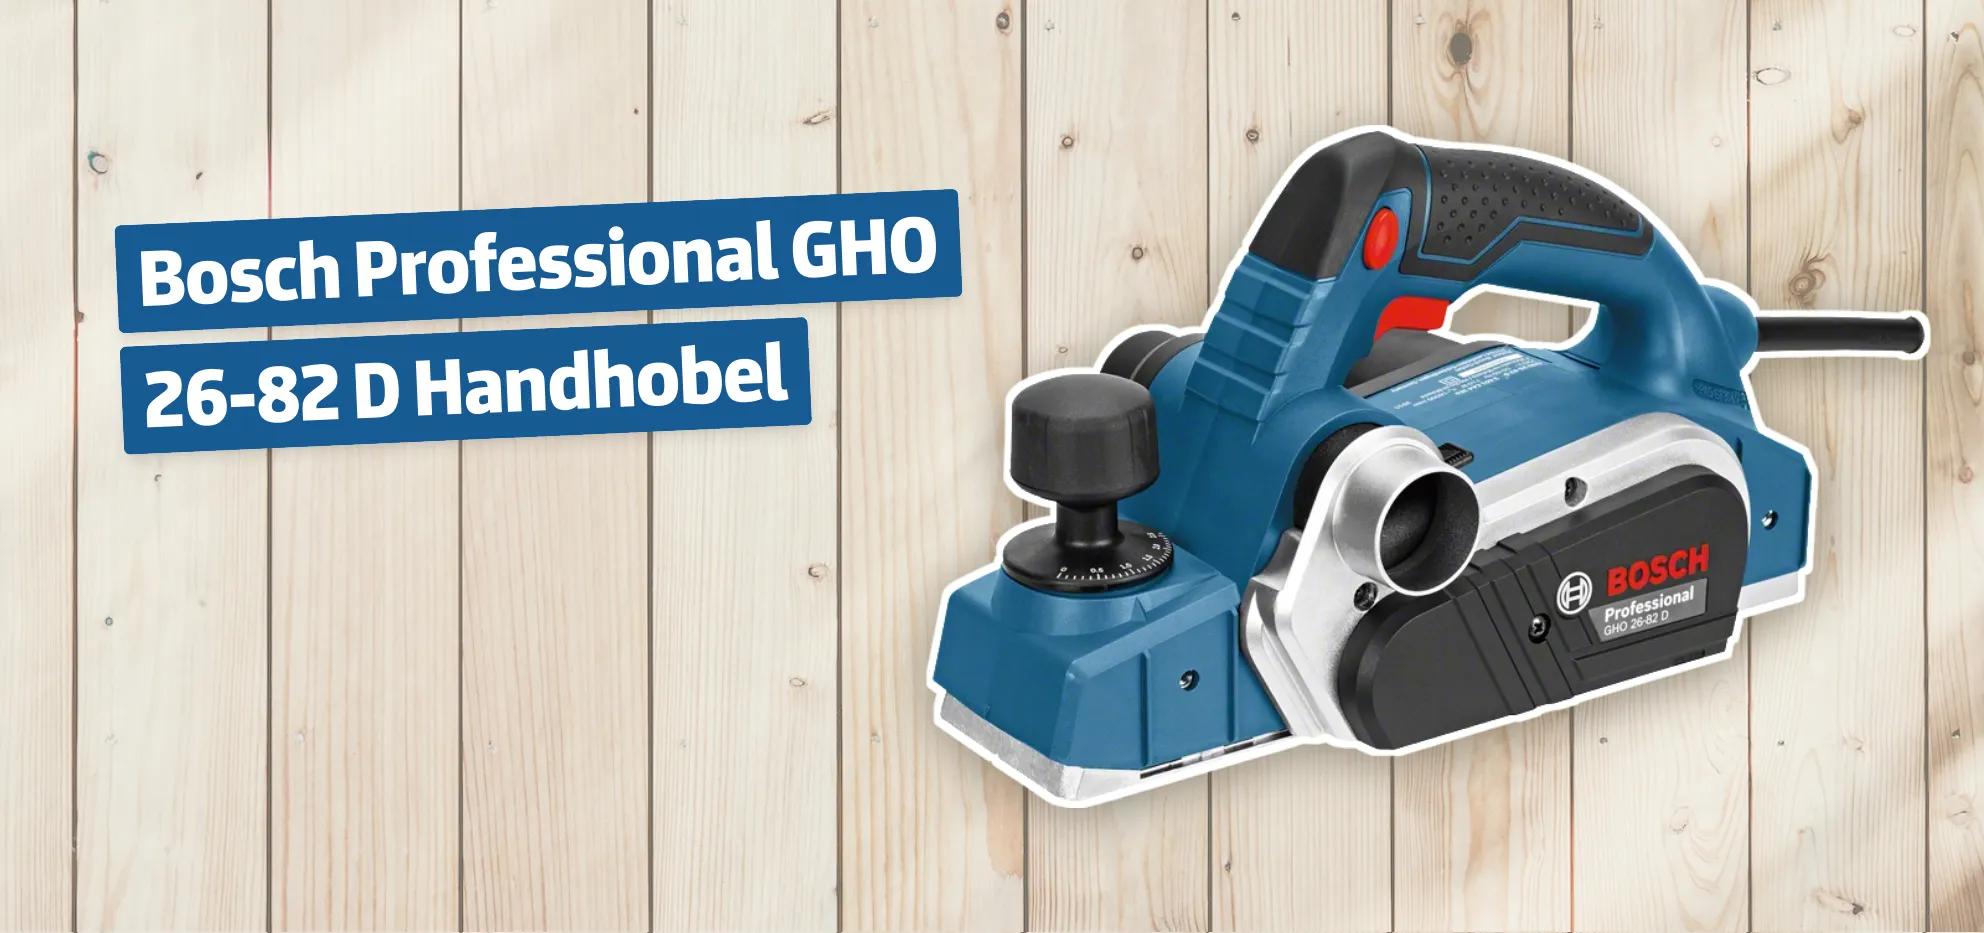 Bosch Professional GHO 26-82 D Handhobel